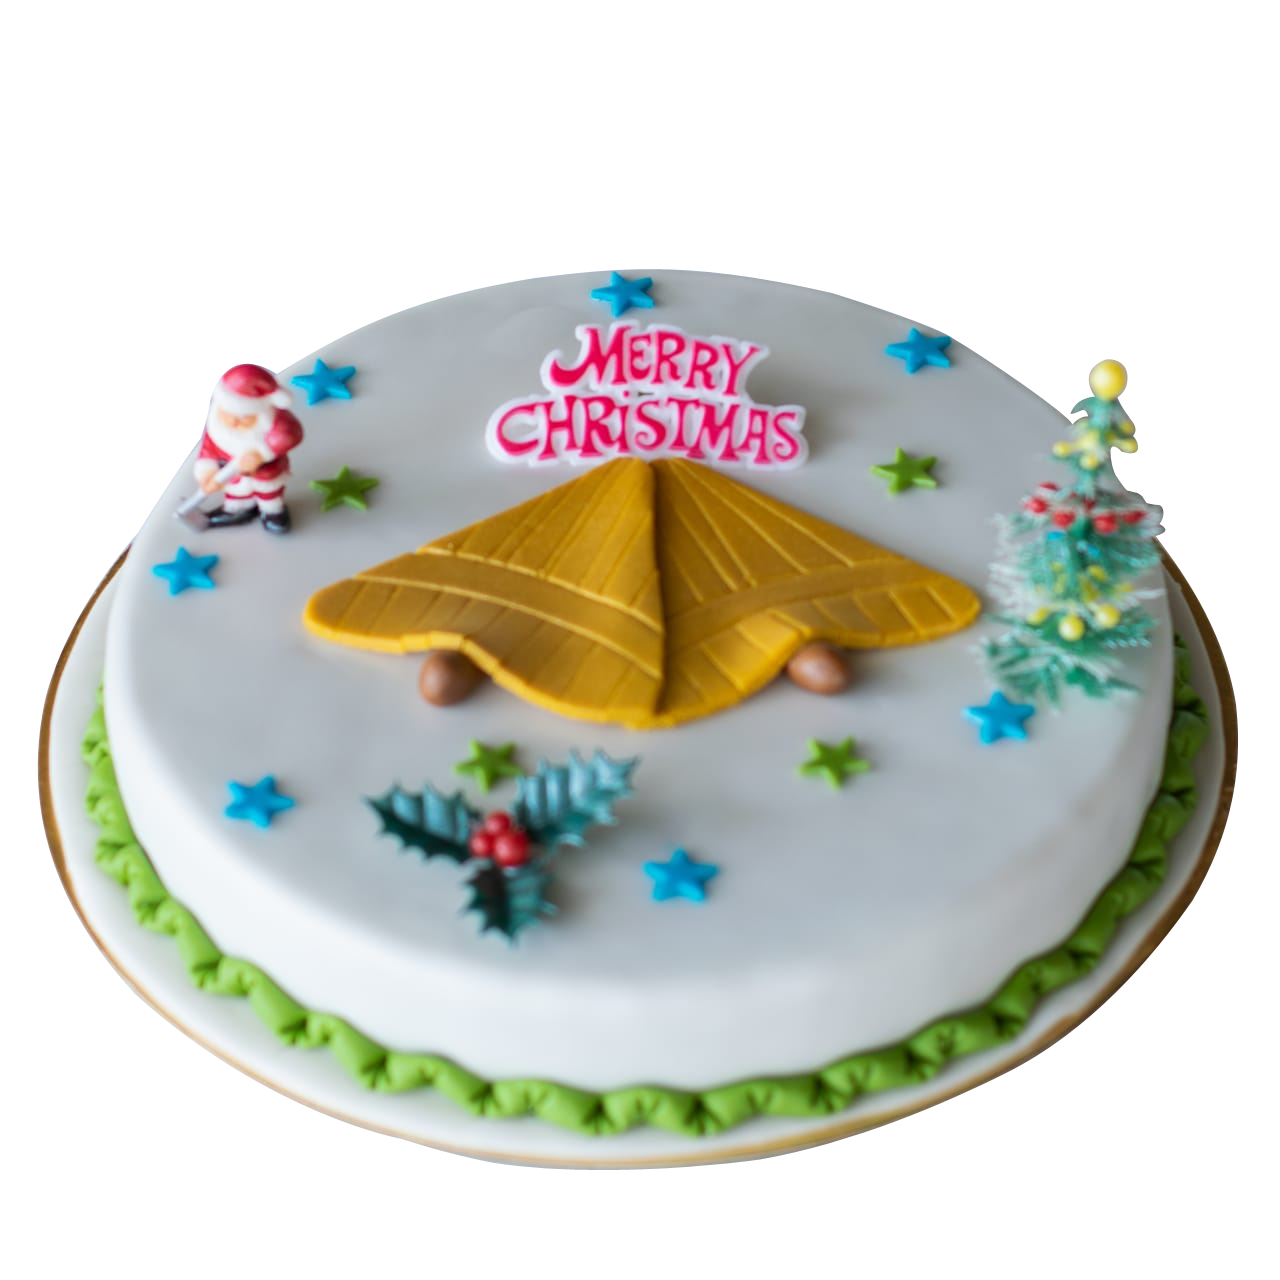 Classic Christmas cake recipe | BBC Good Food